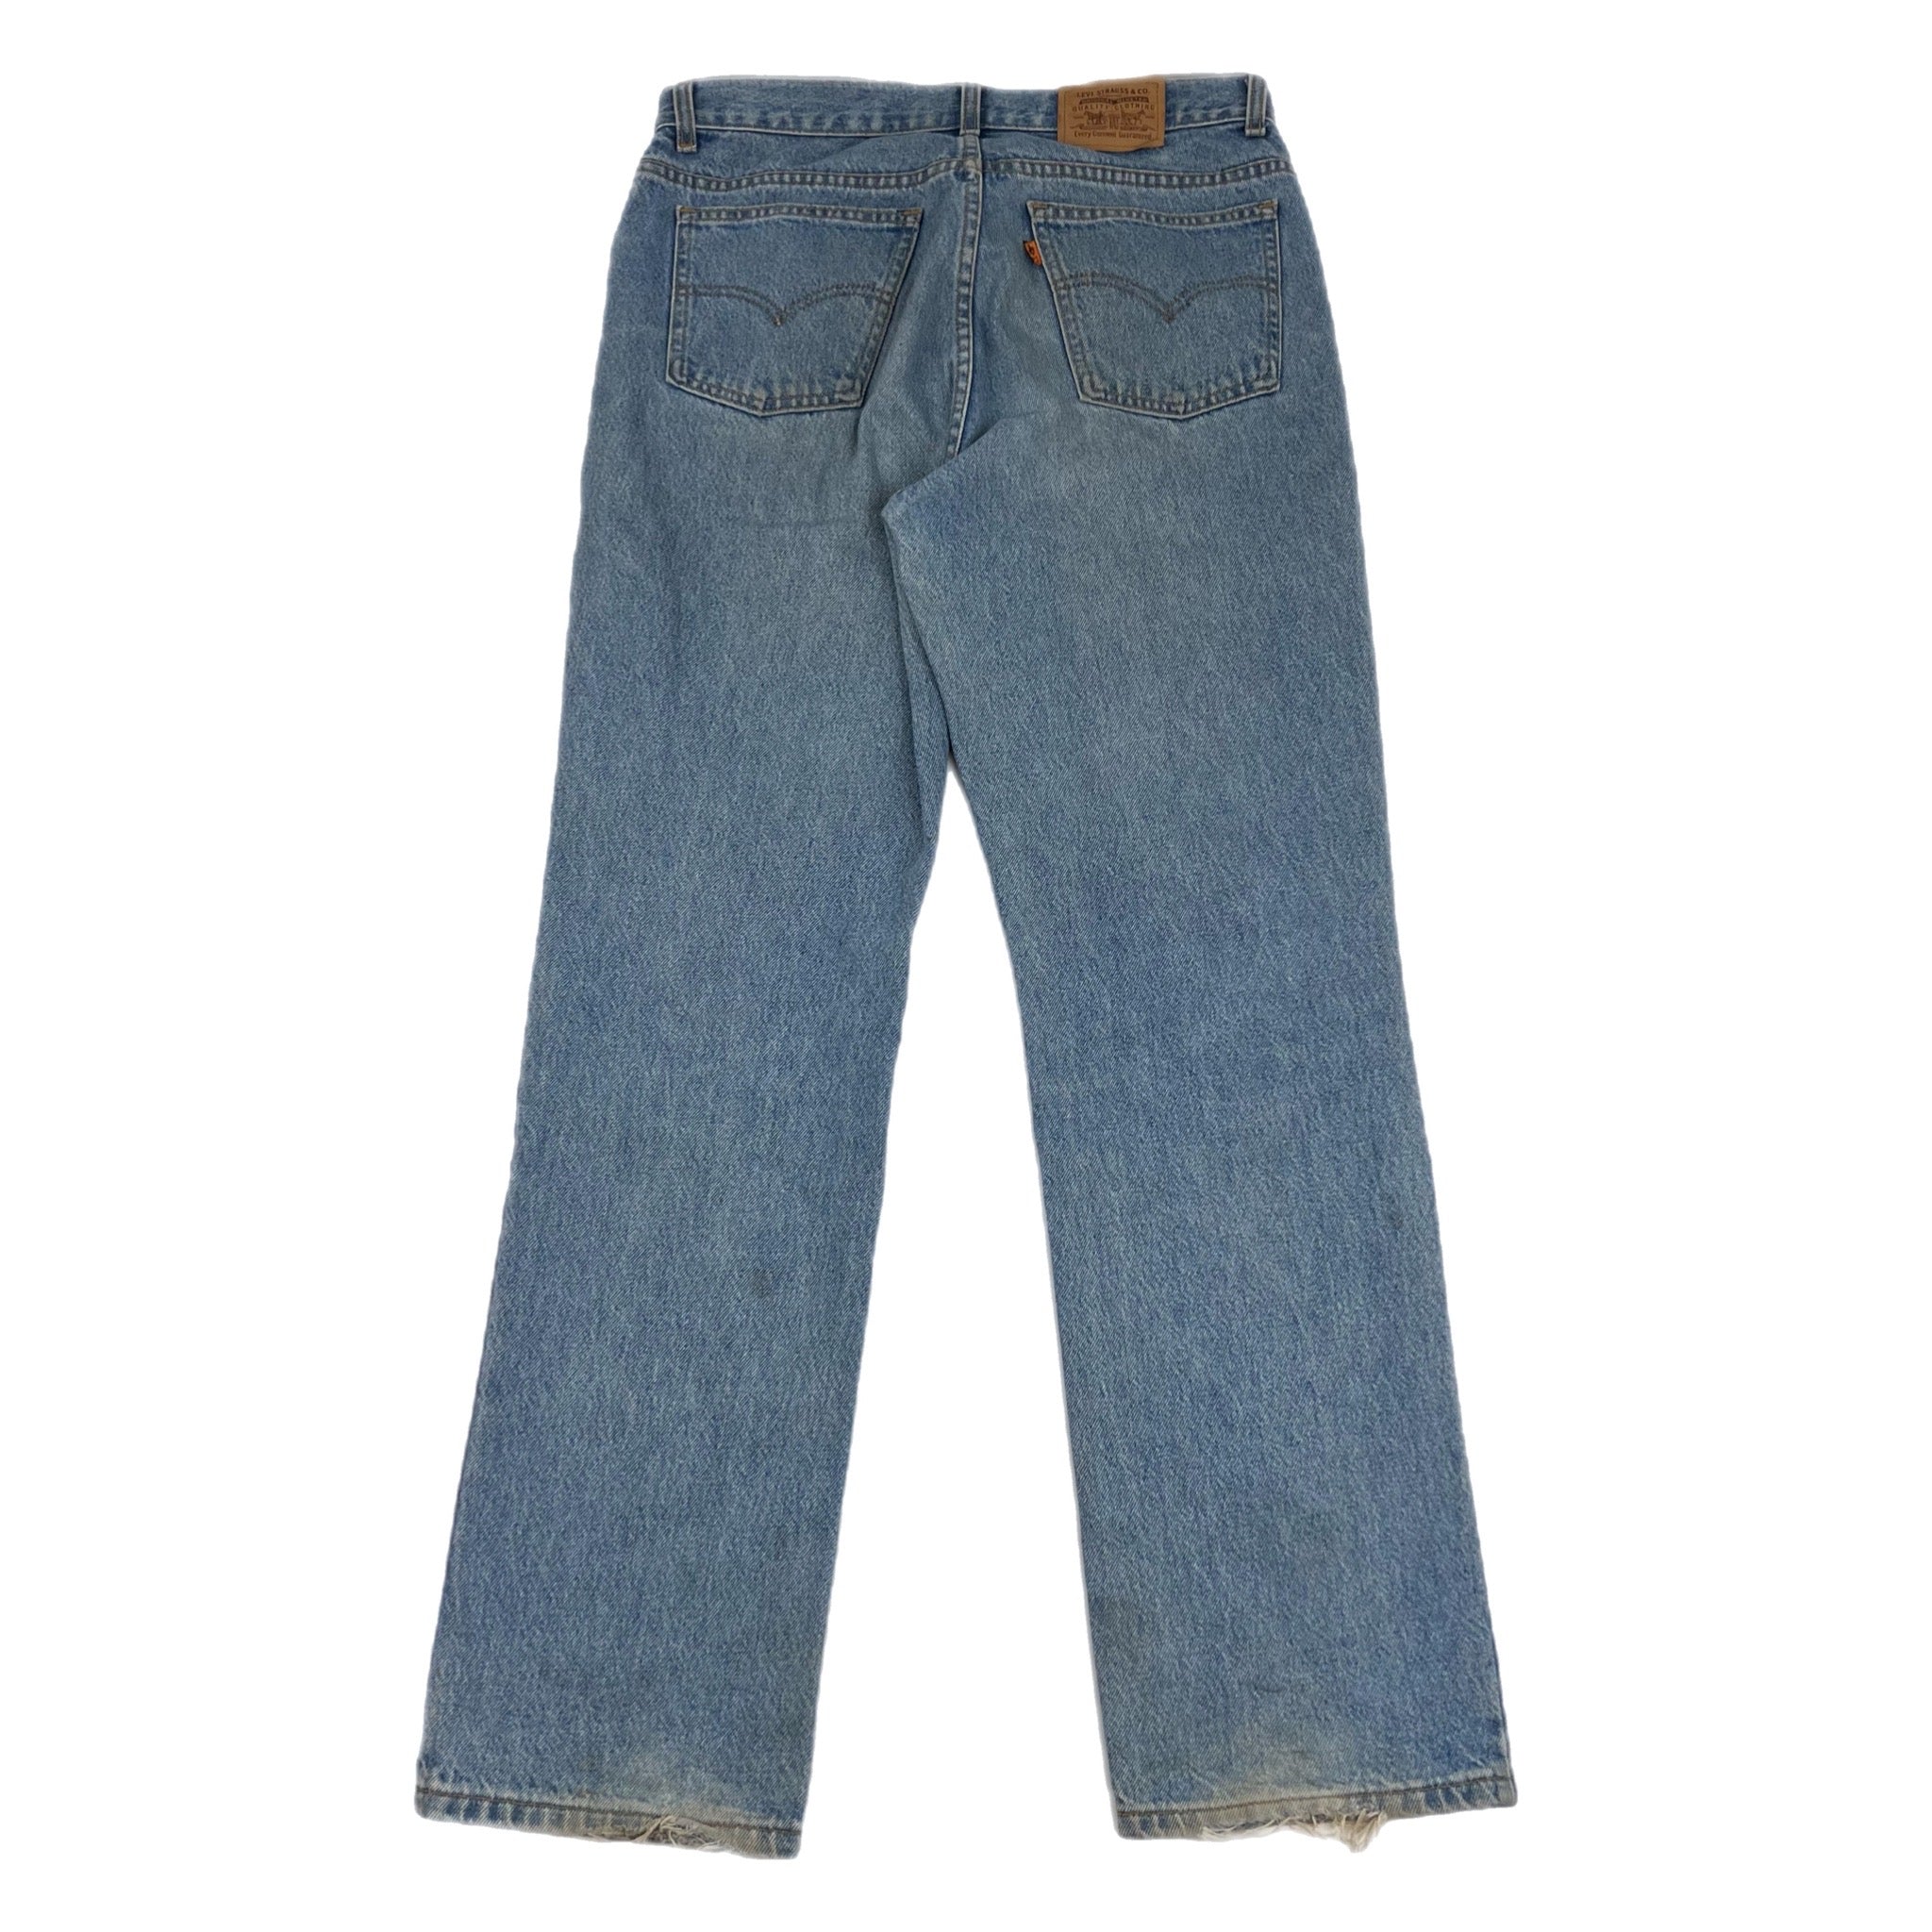 Vintage Levi’s Orange Tab Light Wash Denim - Faded Blue Jeans